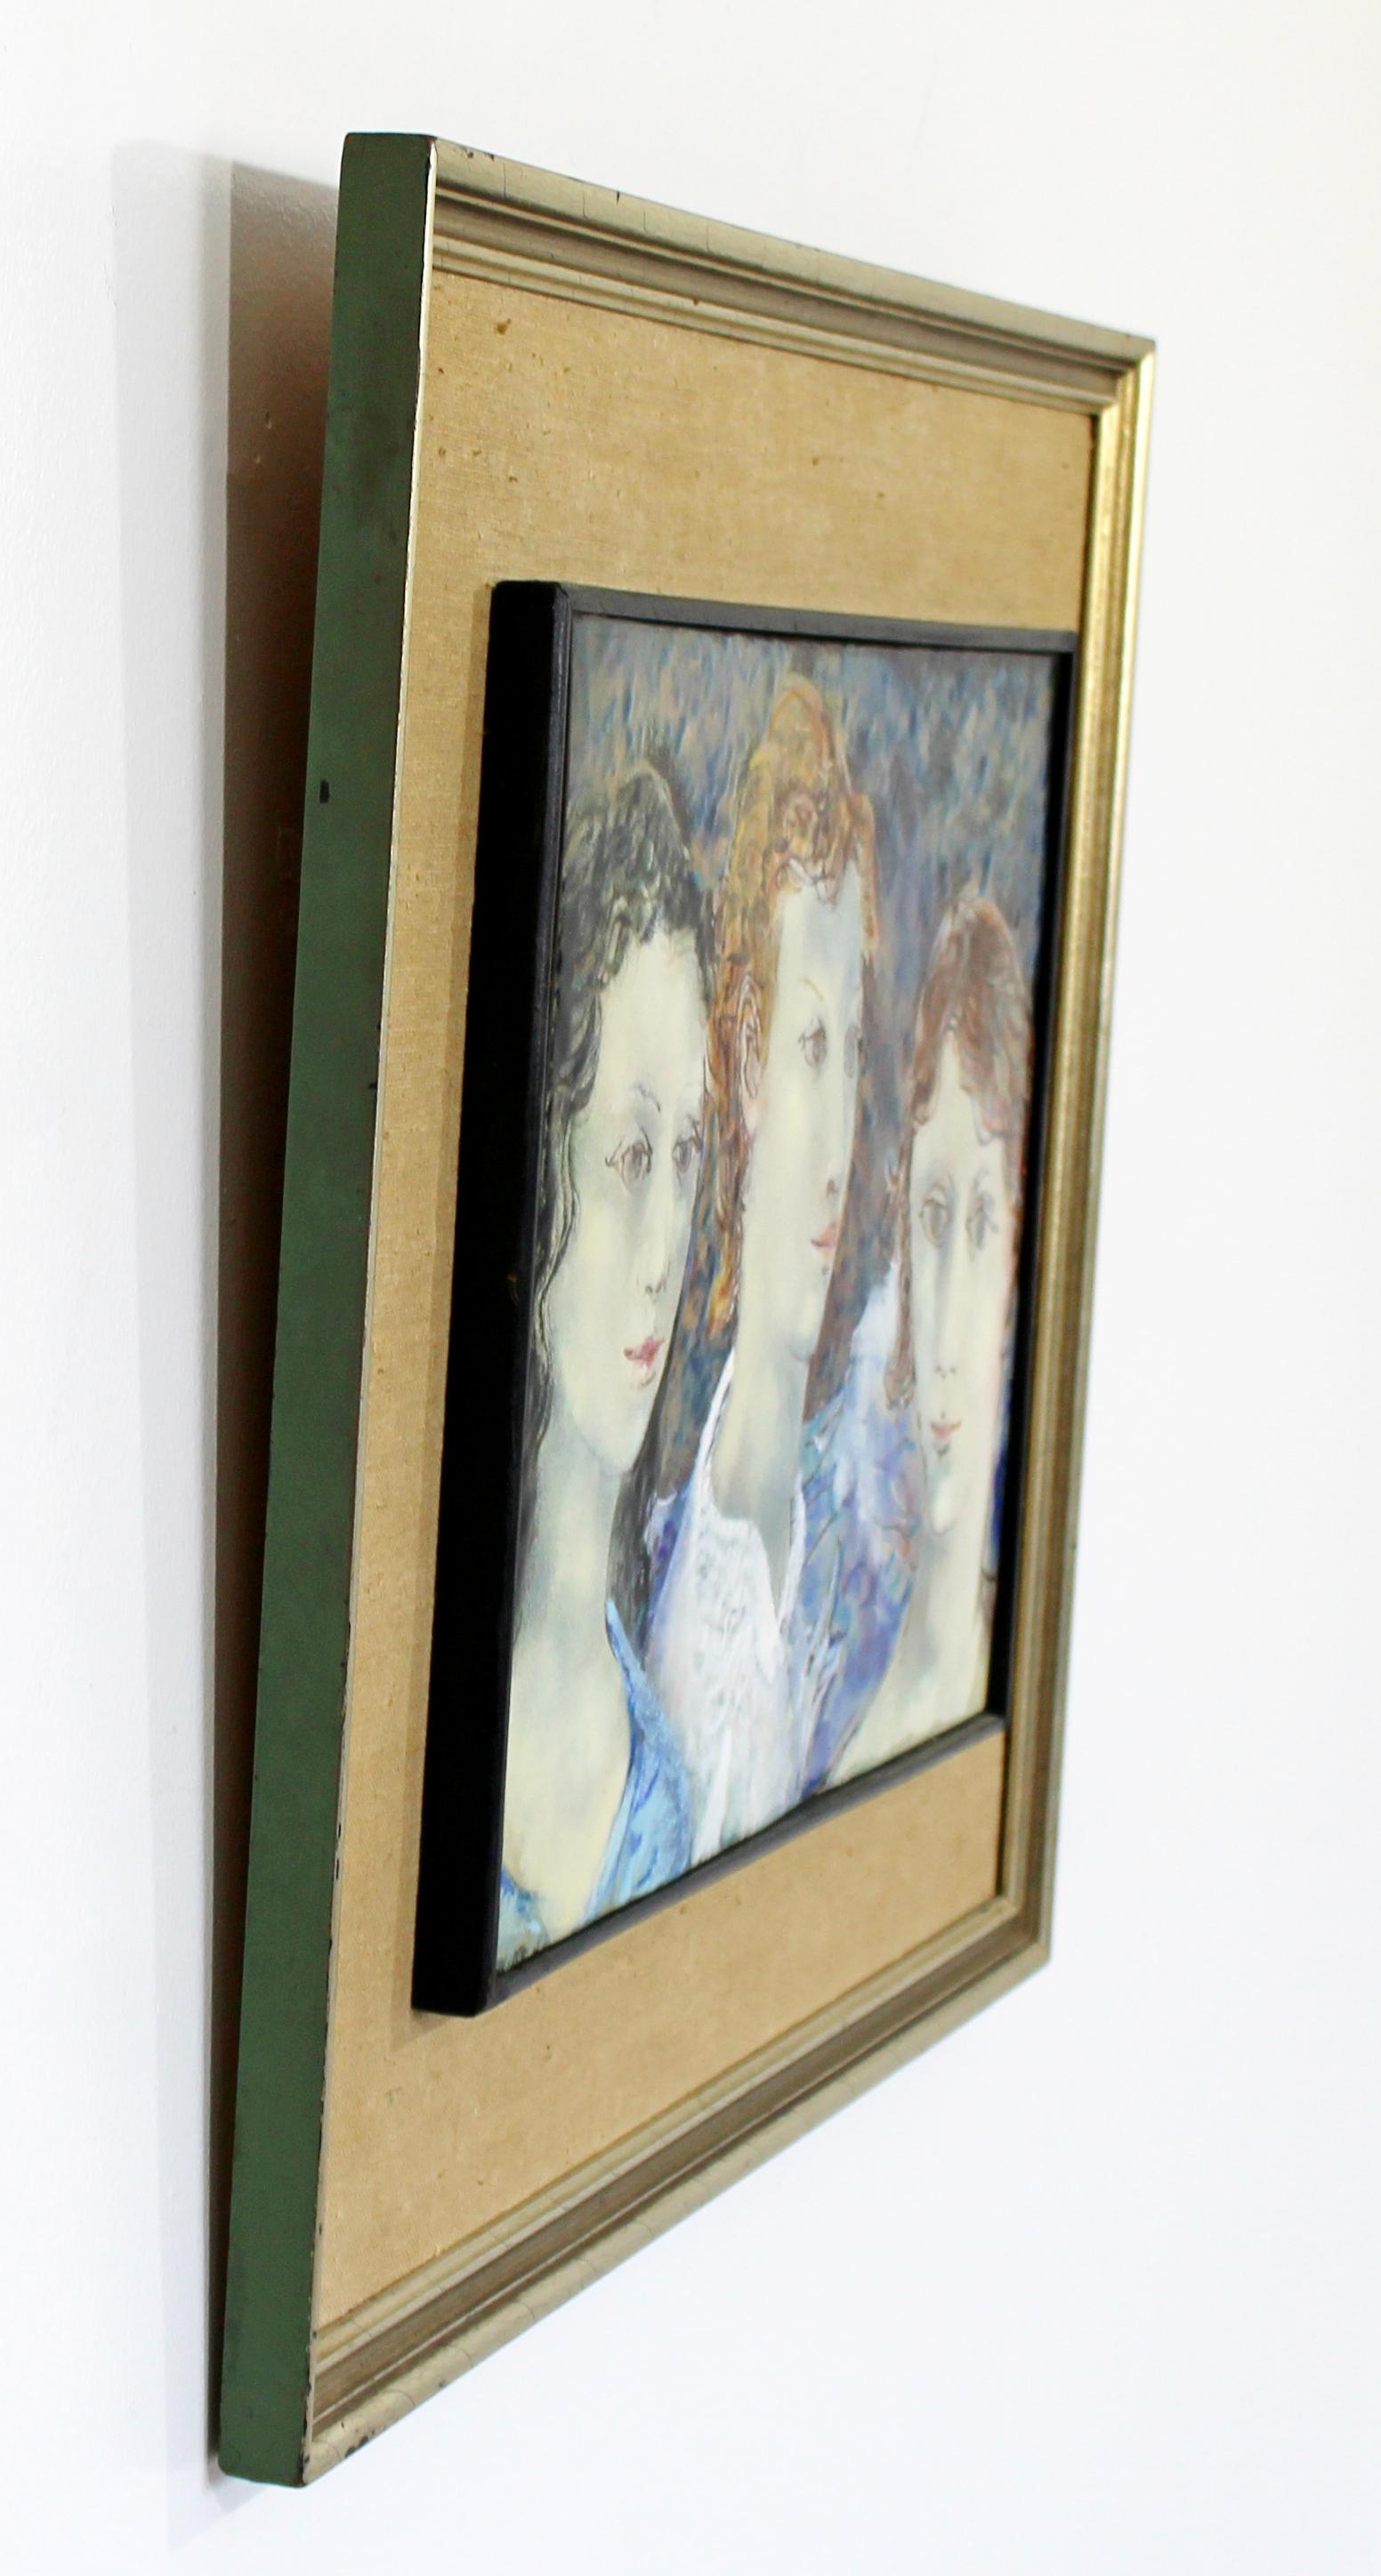 American Mid-Century Modern Framed Enamel Art Signed by Richard Loving, Dated 1957